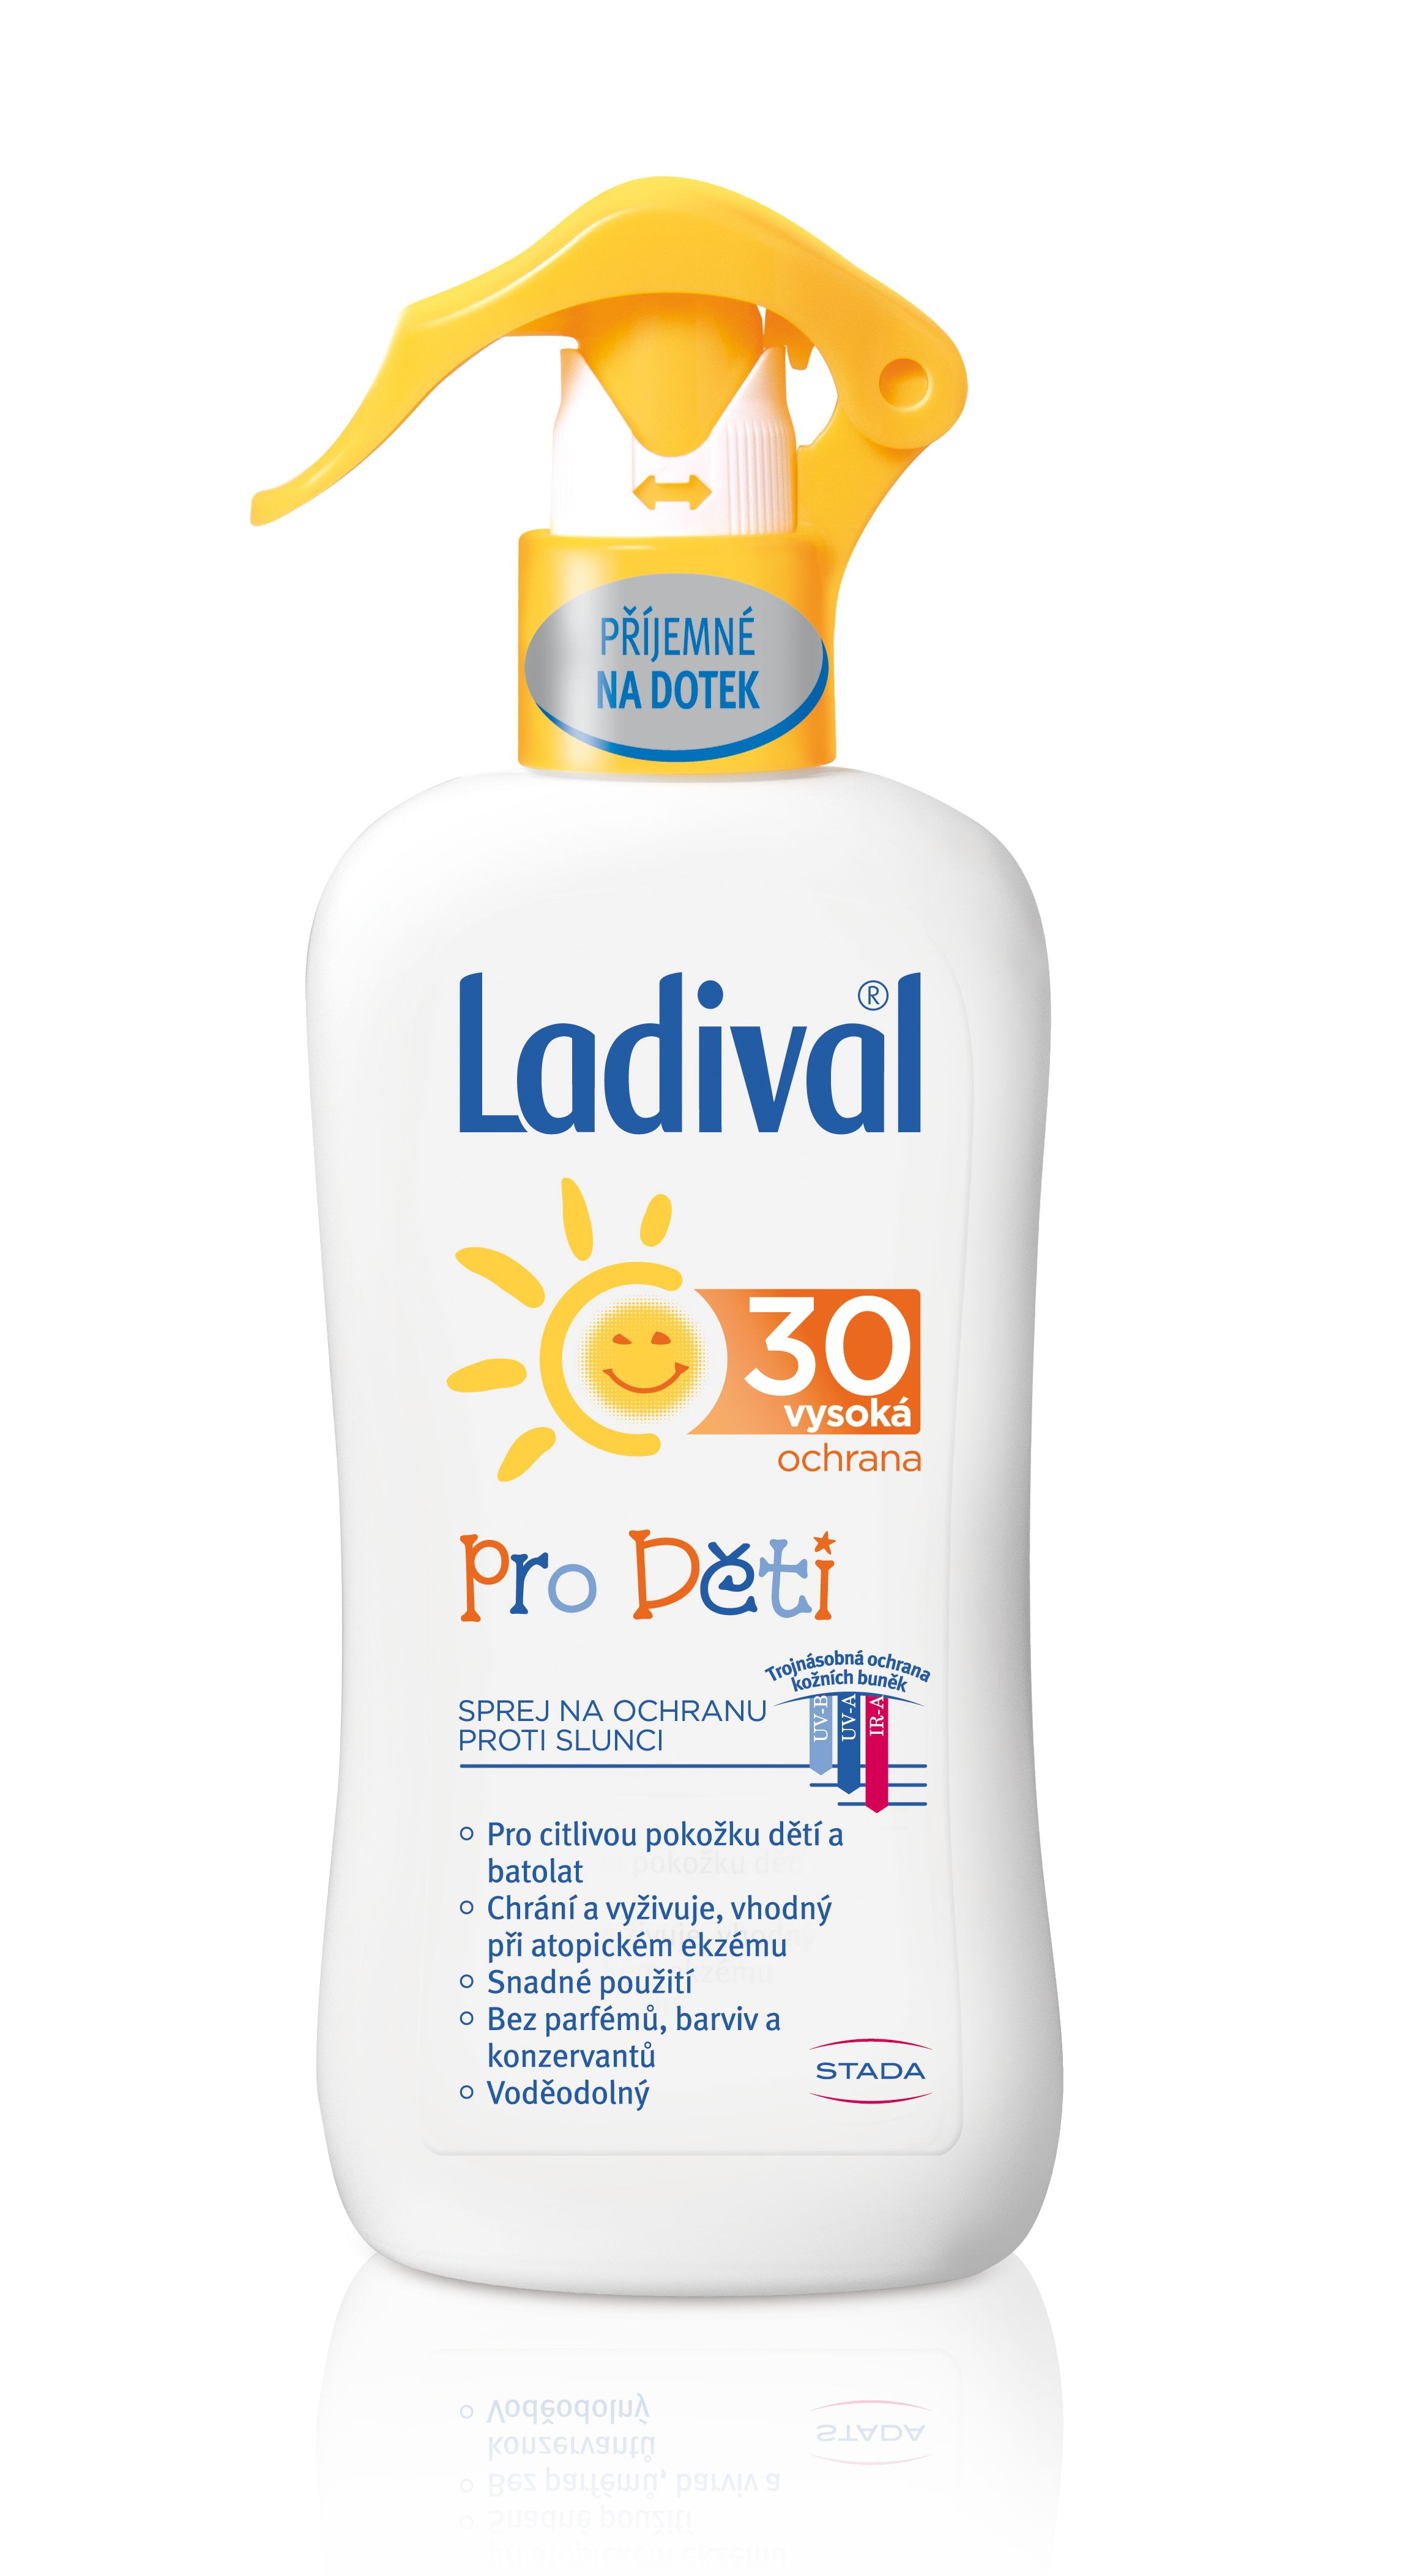 Ladival Ochrana proti slunci OF30 sprej pro děti 200 ml Ladival